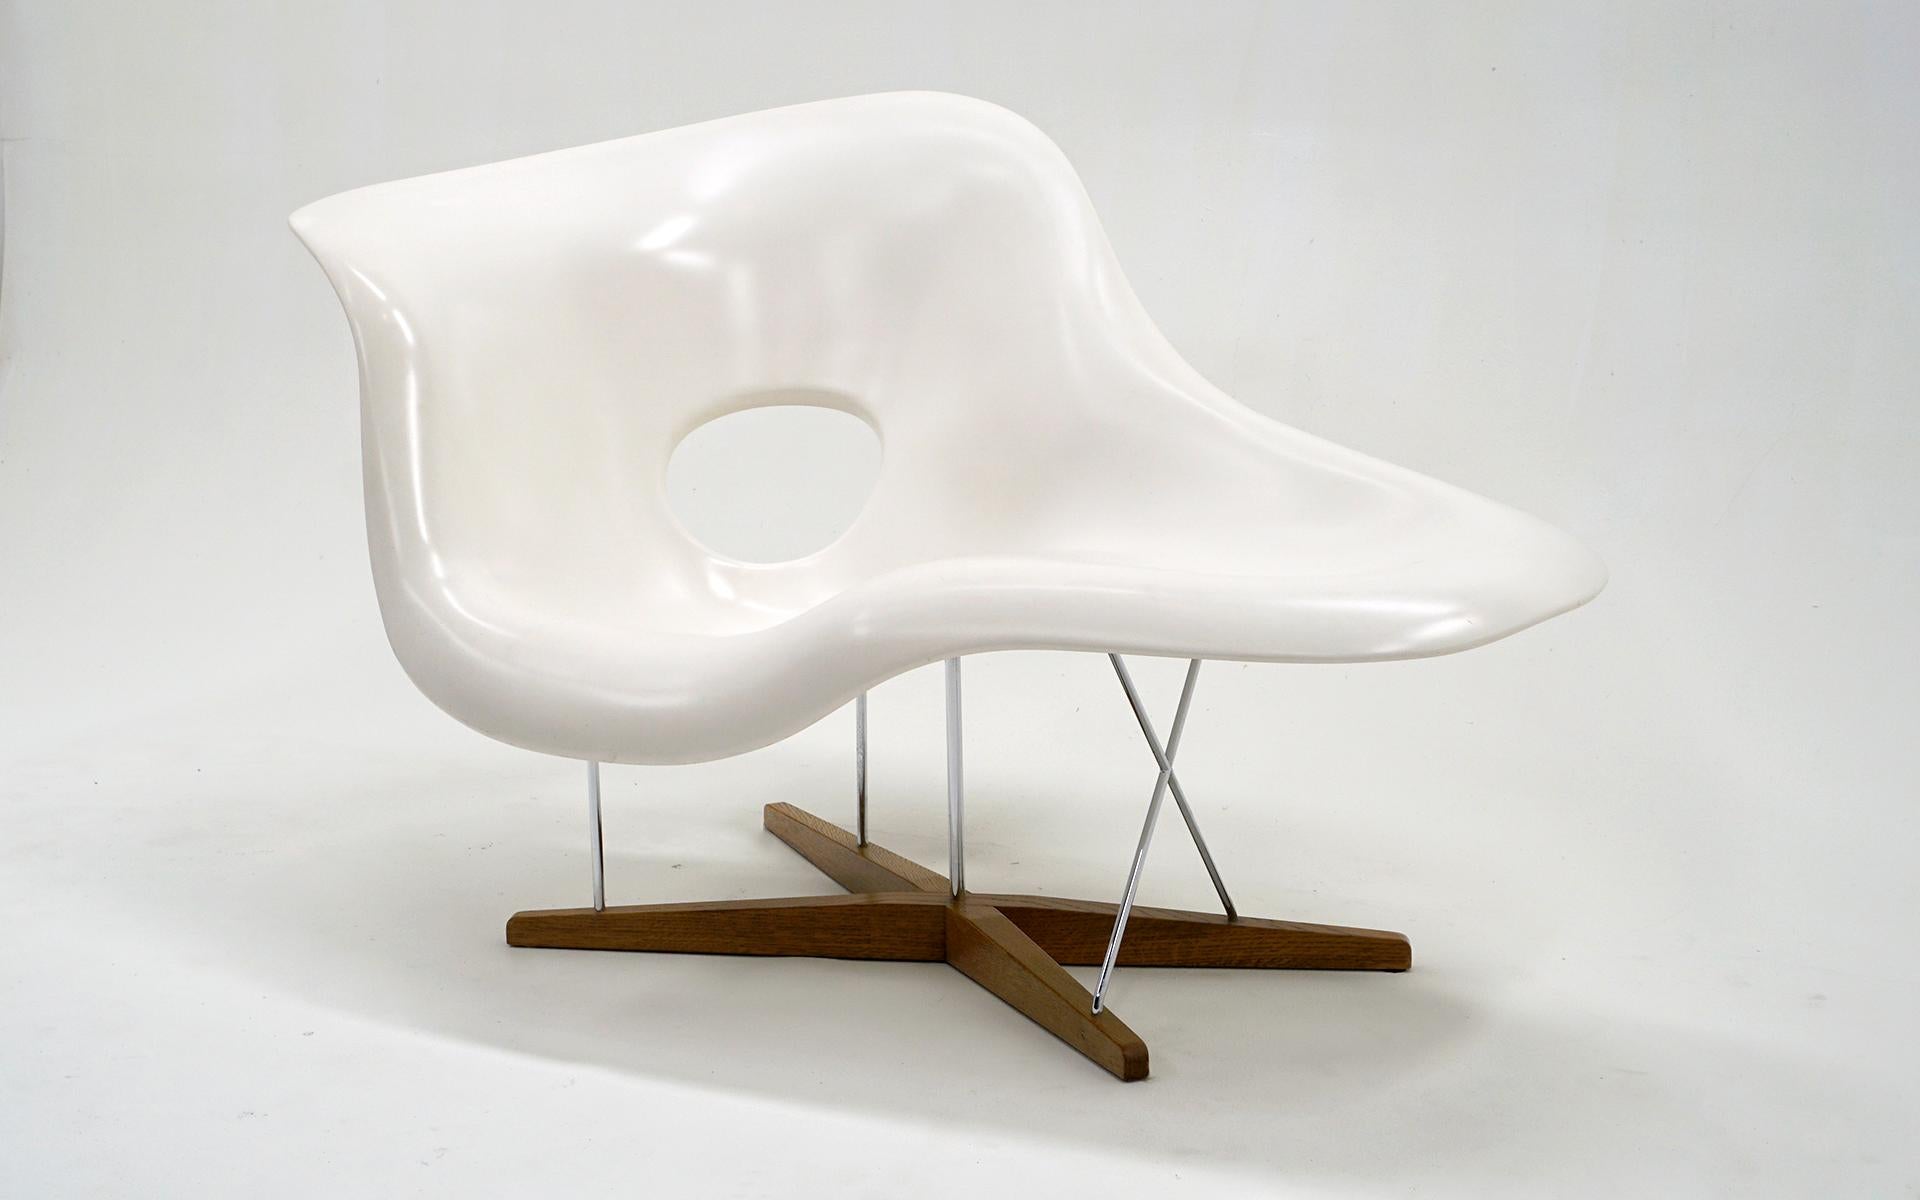 La Chaise de Charles and Ray Eames para Vitra. Rara construcción de primera generación Moderno de mediados de siglo en venta